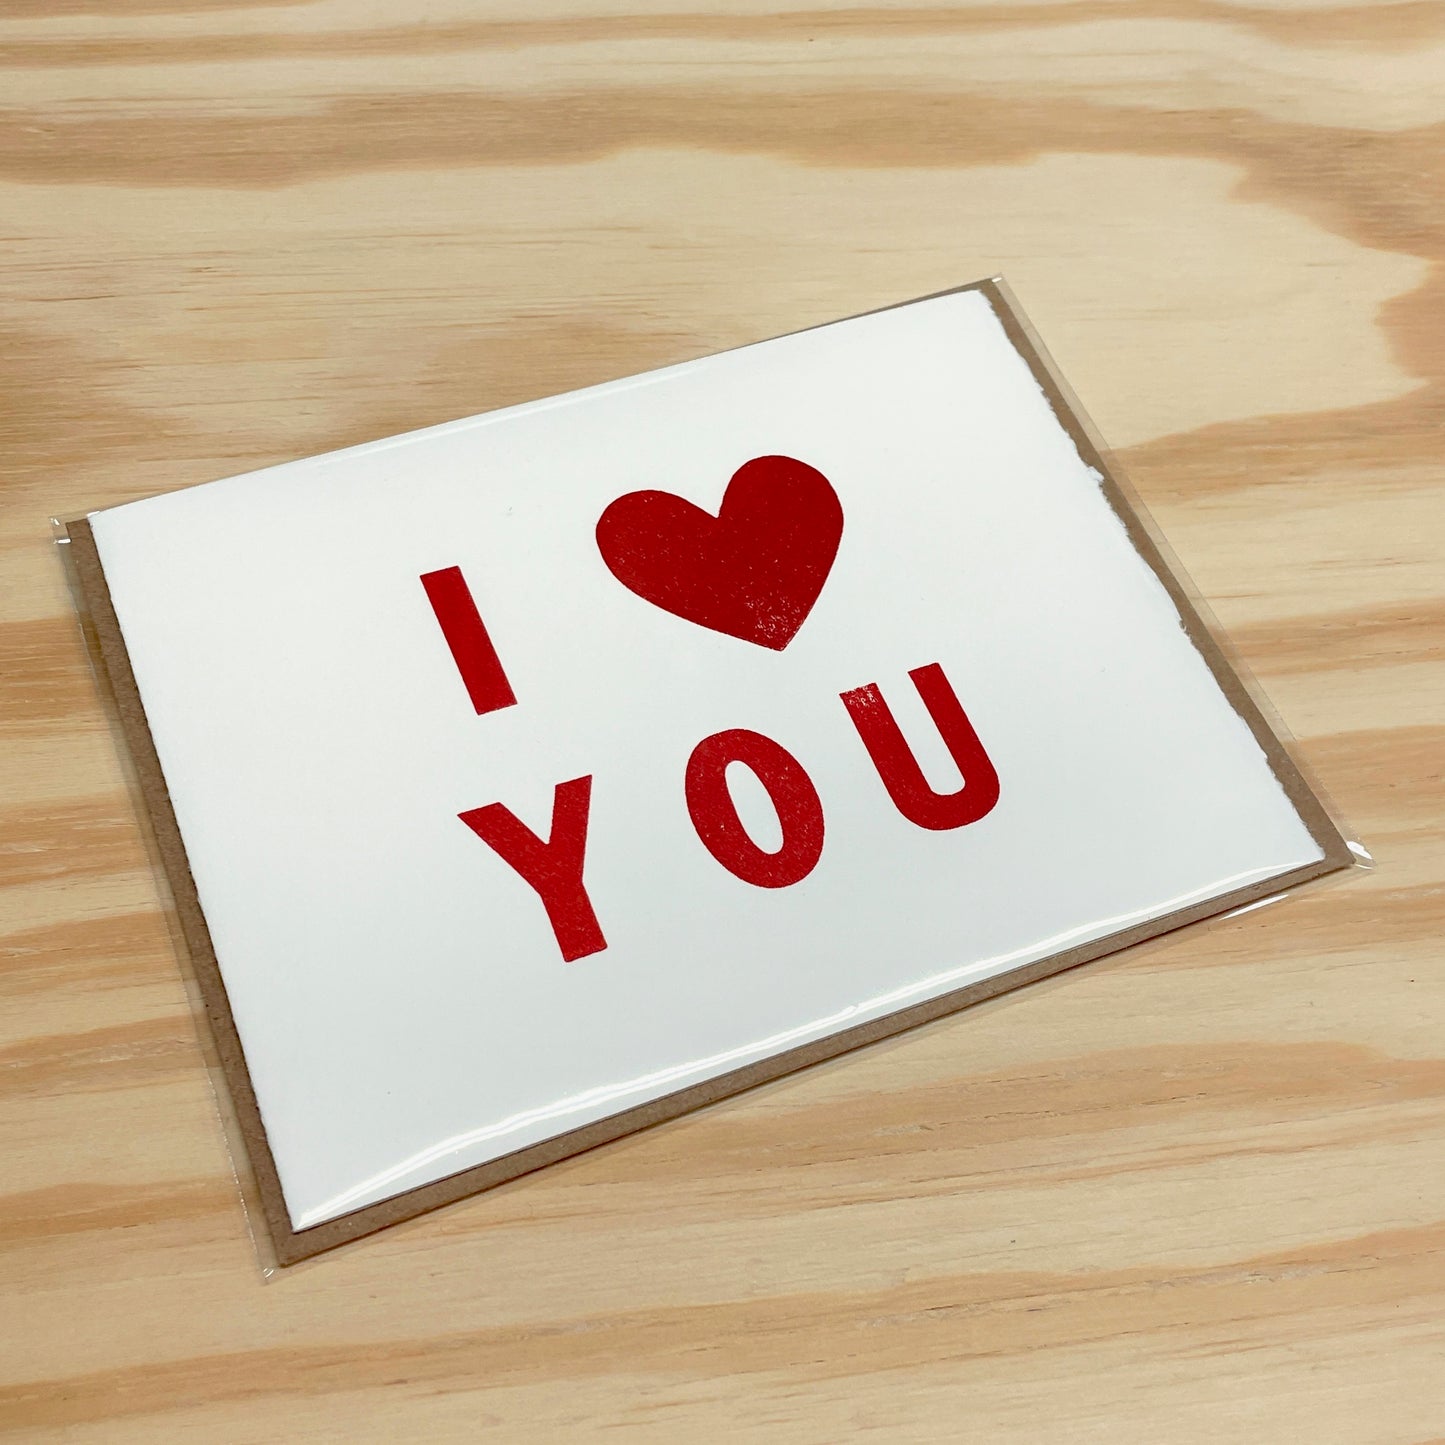 I Heart You - single card - wood type letterpress printed